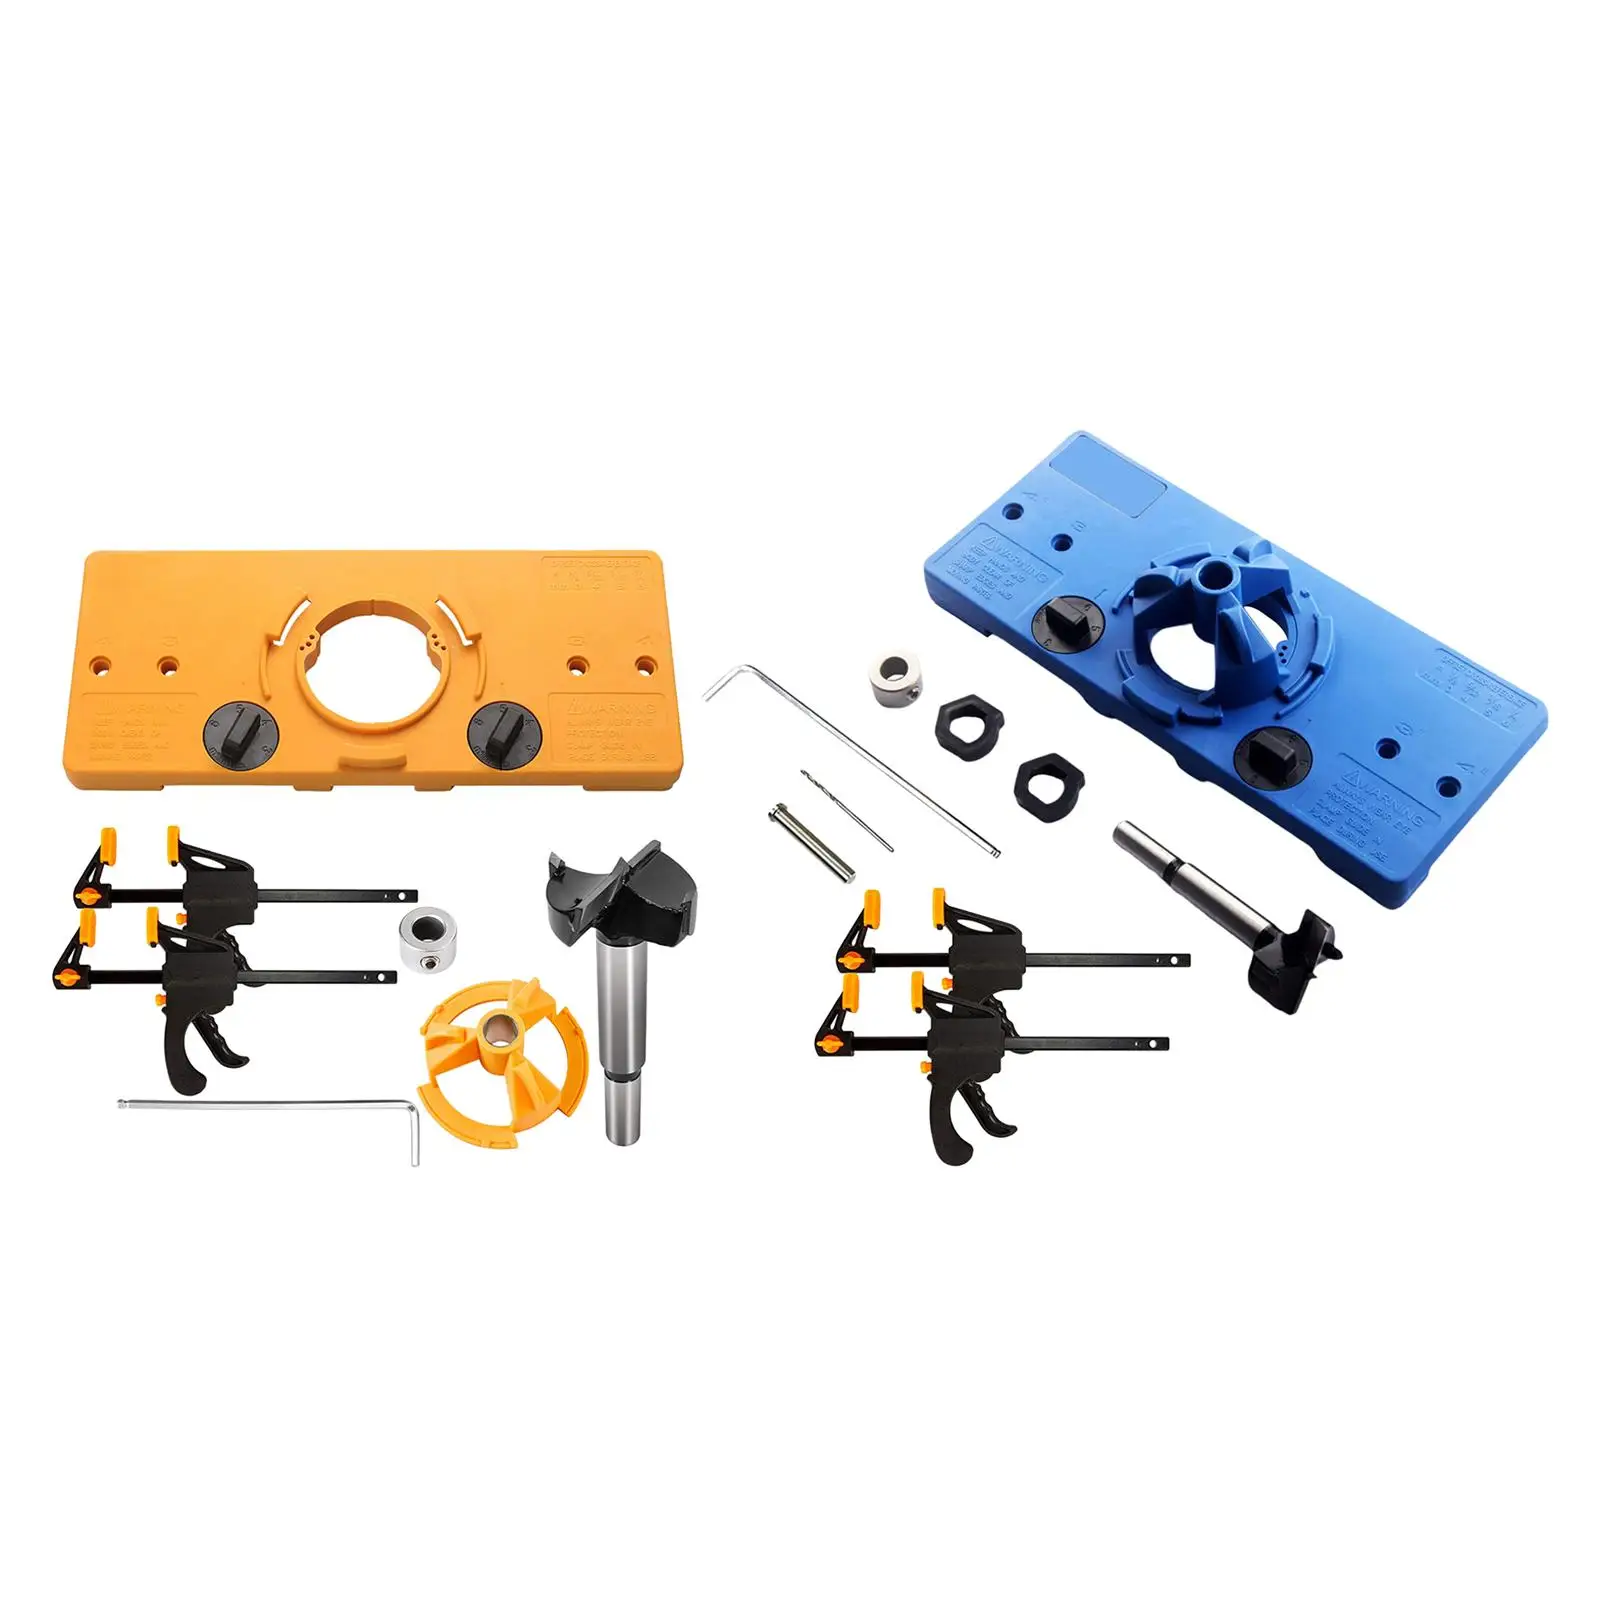 35mm Hinge Drilling Jig   Locator Jig Kit for Drawer Cupboard Cabinet